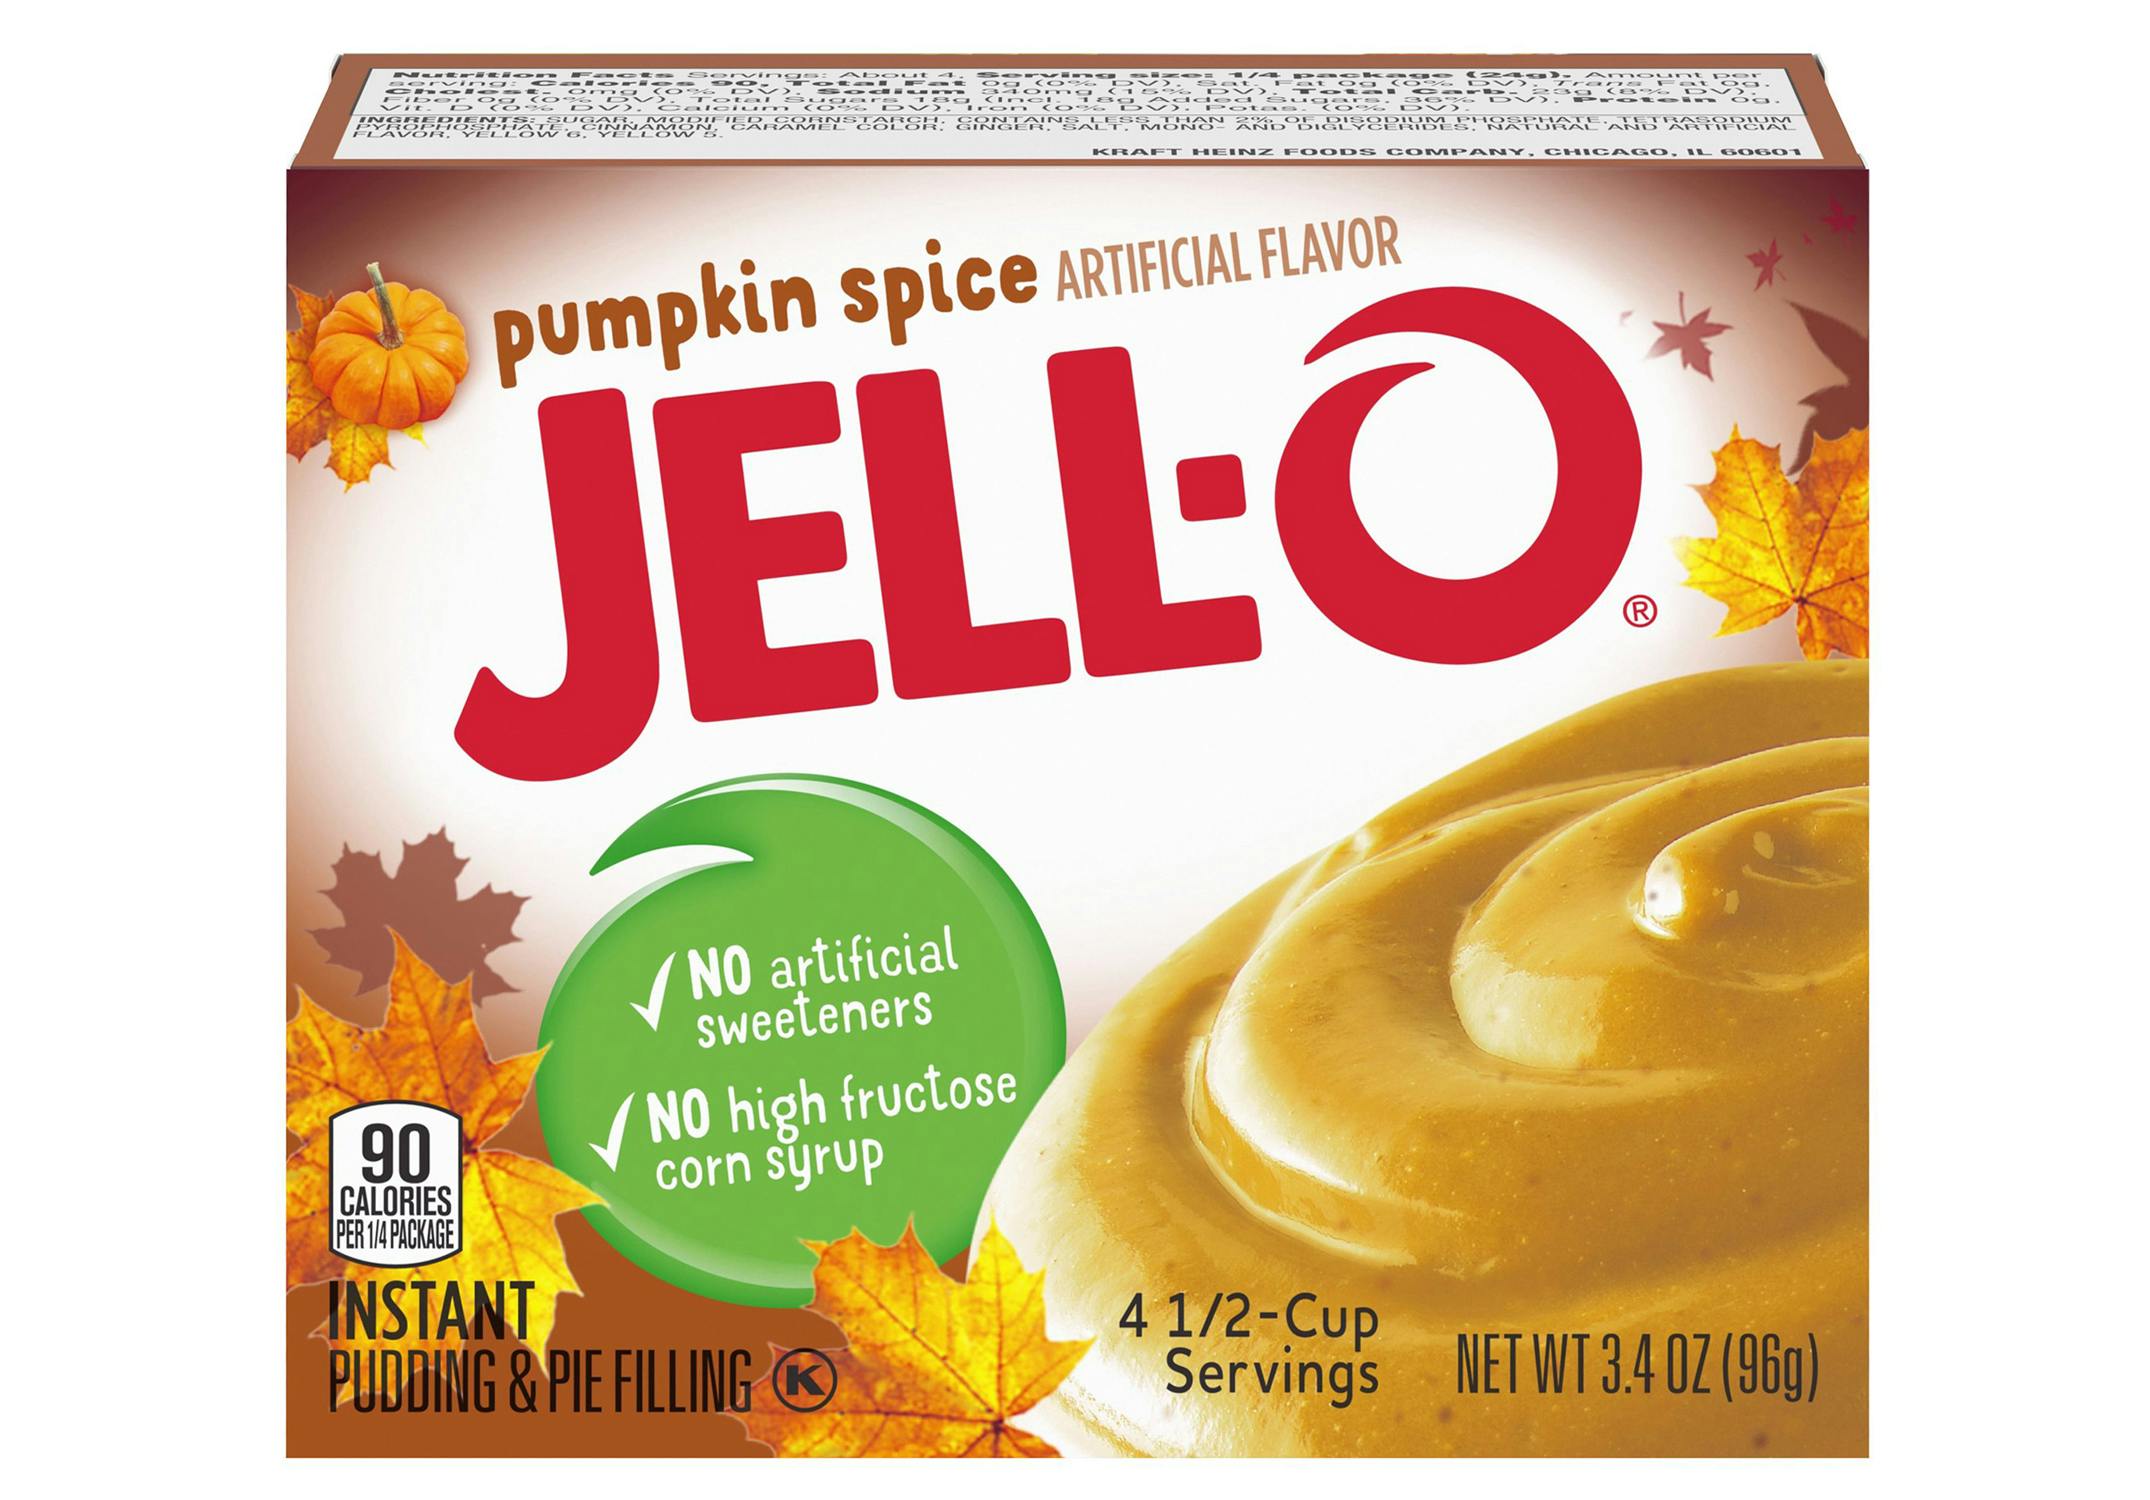 pumpkin spice-flavored Jell-O box